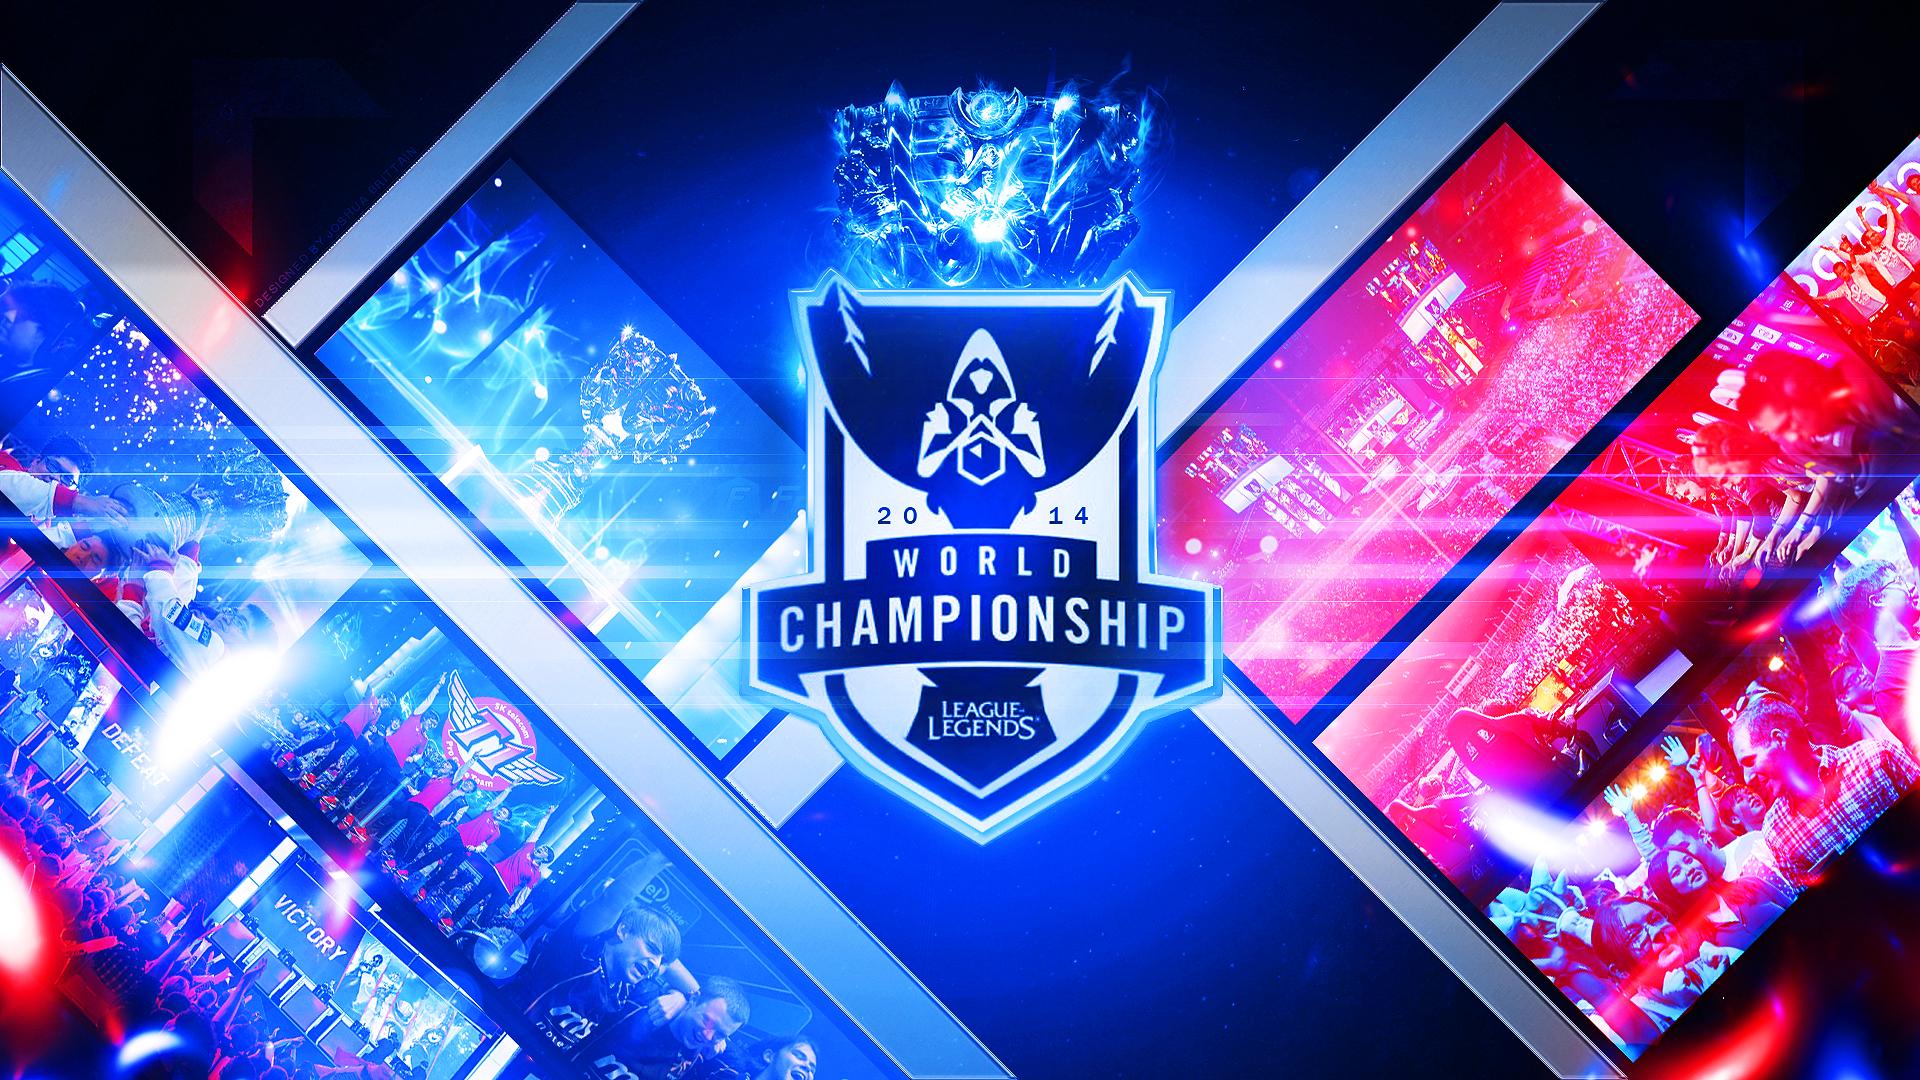 League Of Legends World Championship 2018 - HD Wallpaper 